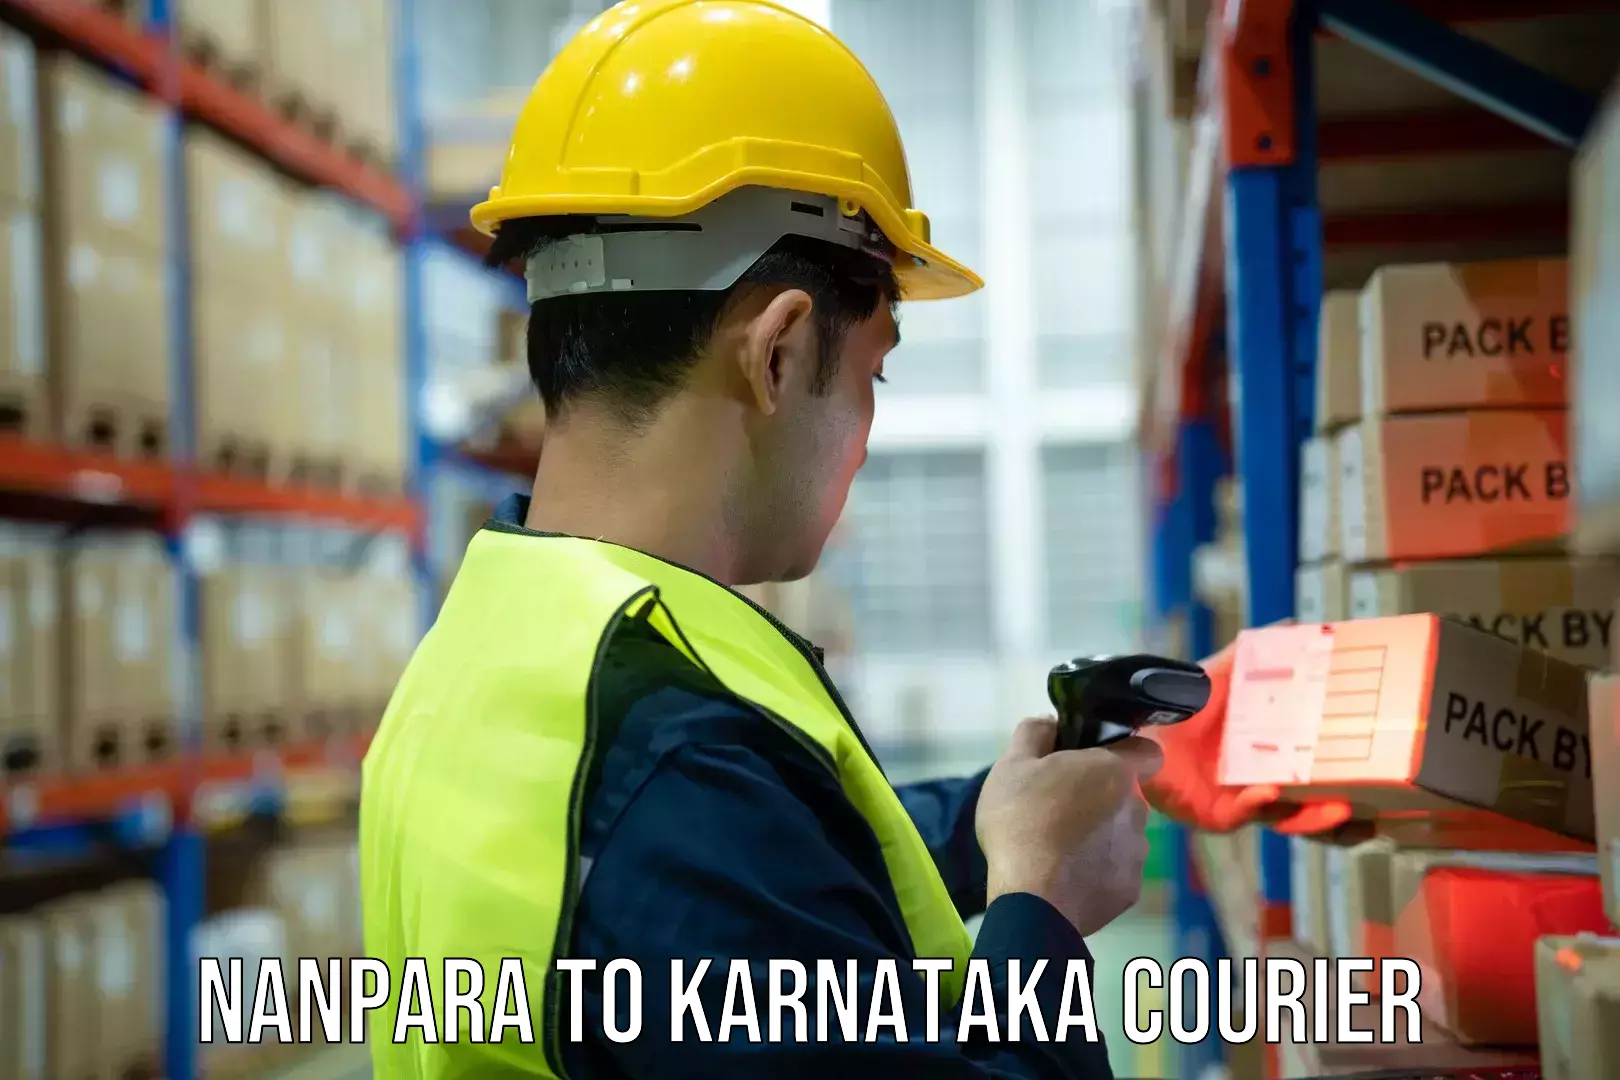 Fast delivery service Nanpara to Karnataka